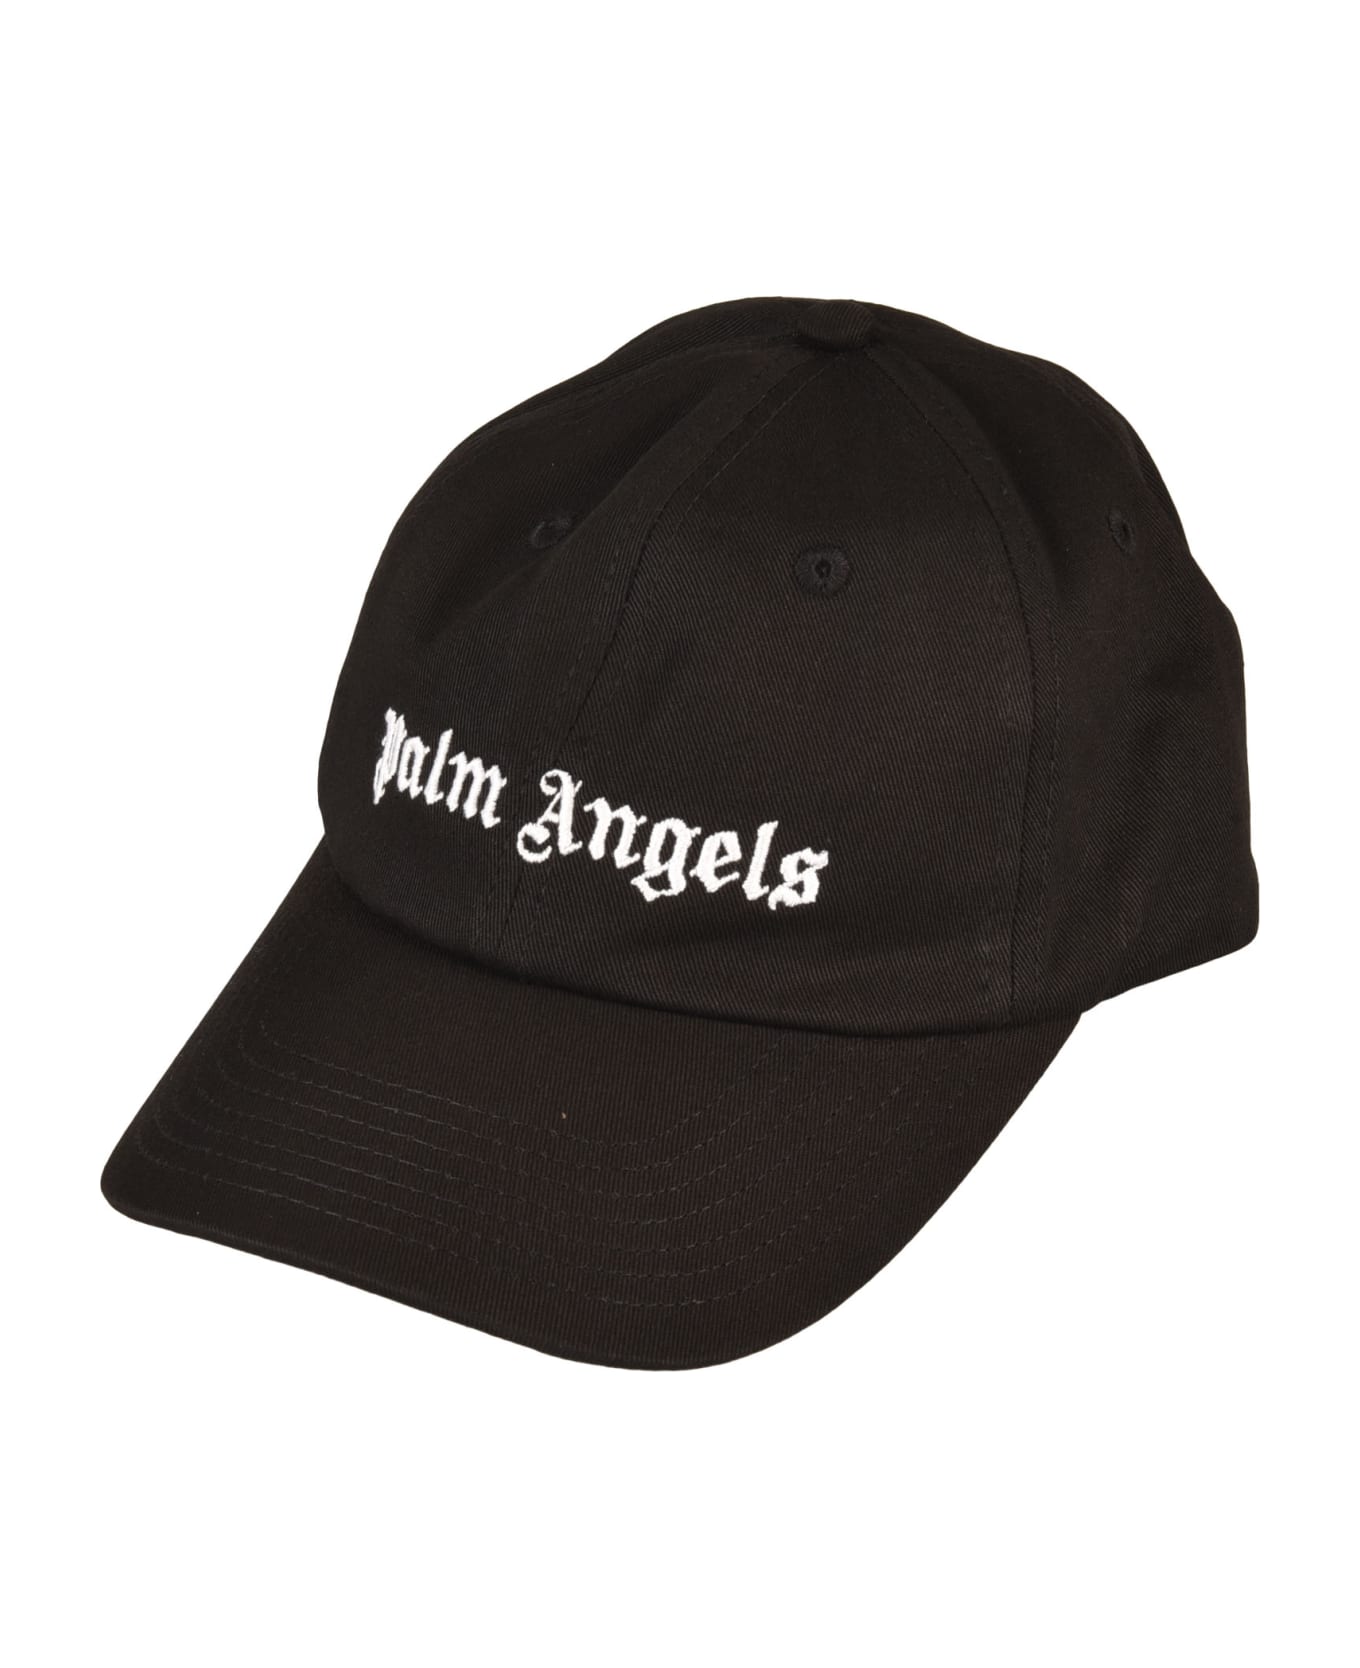 Palm Angels Classic Logo Baseball Cap - Black/White